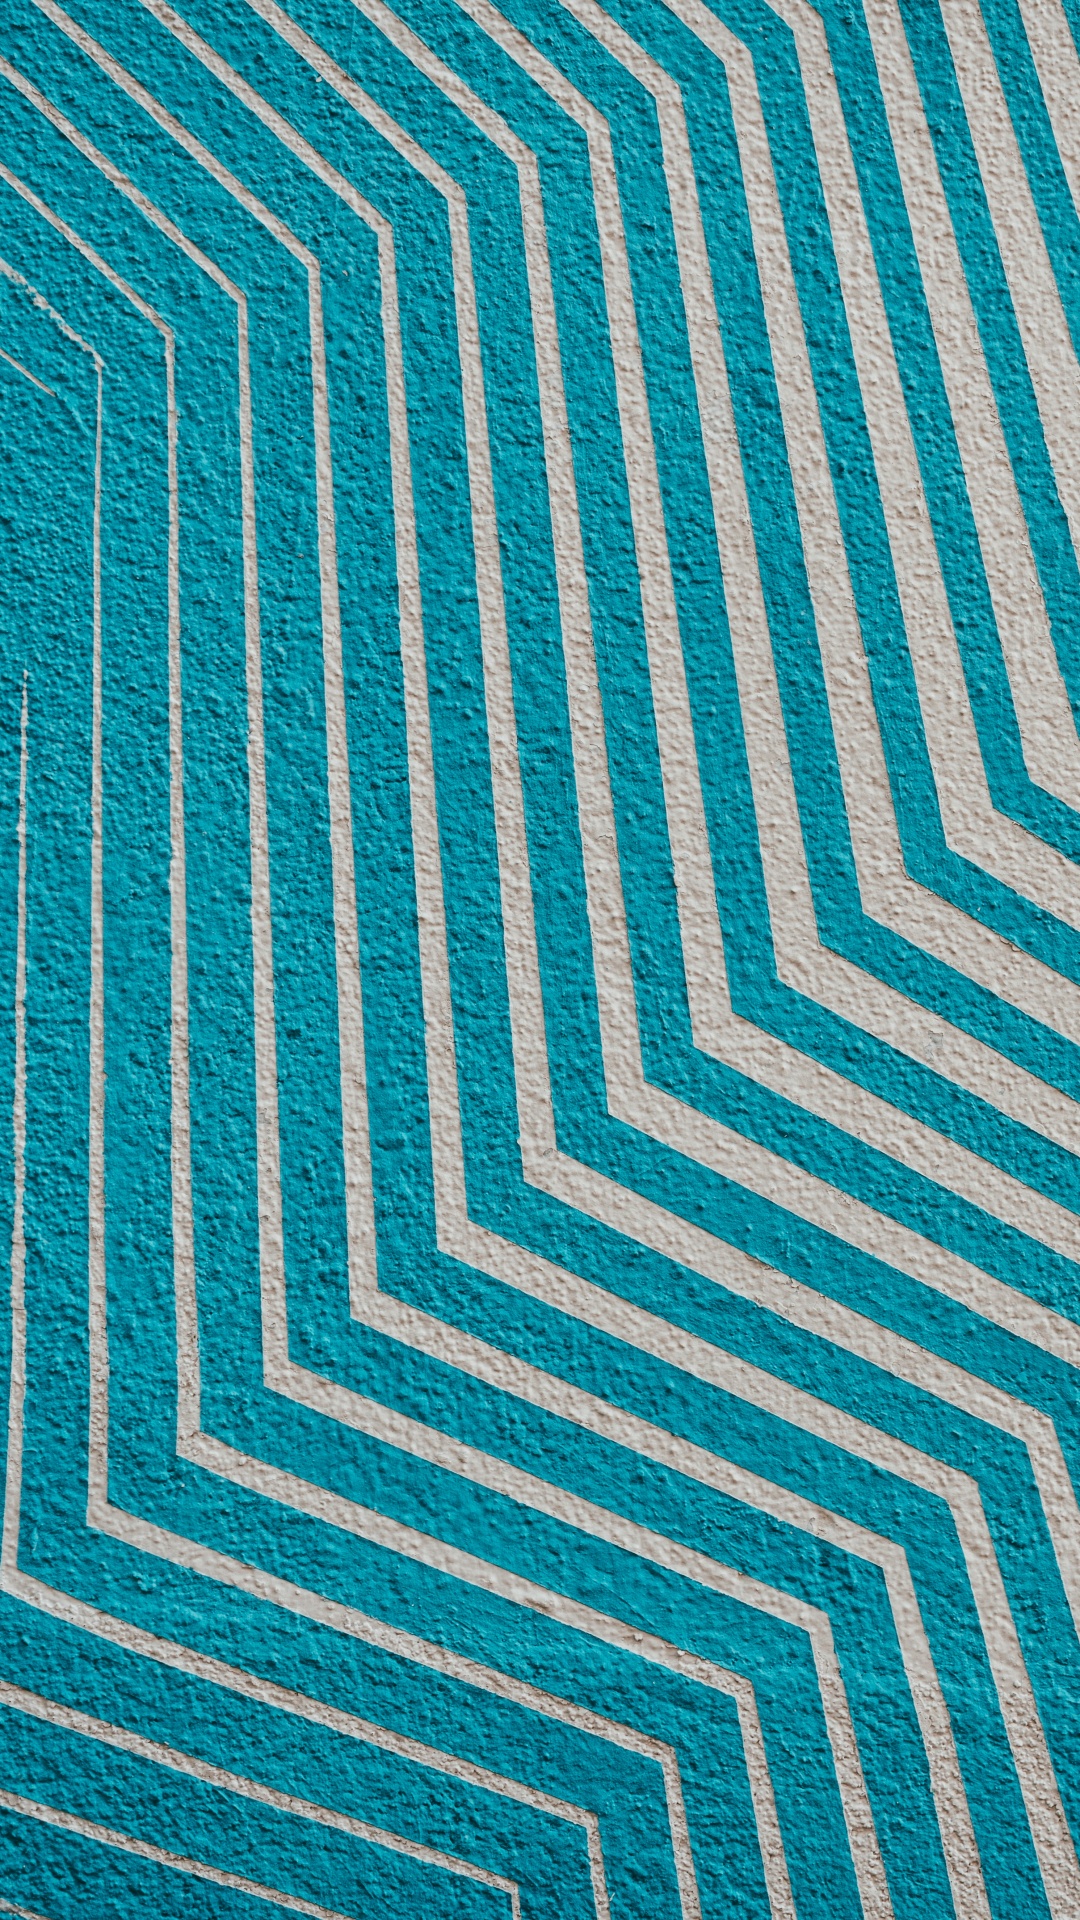 Textil Chevron Azul y Blanco. Wallpaper in 1080x1920 Resolution